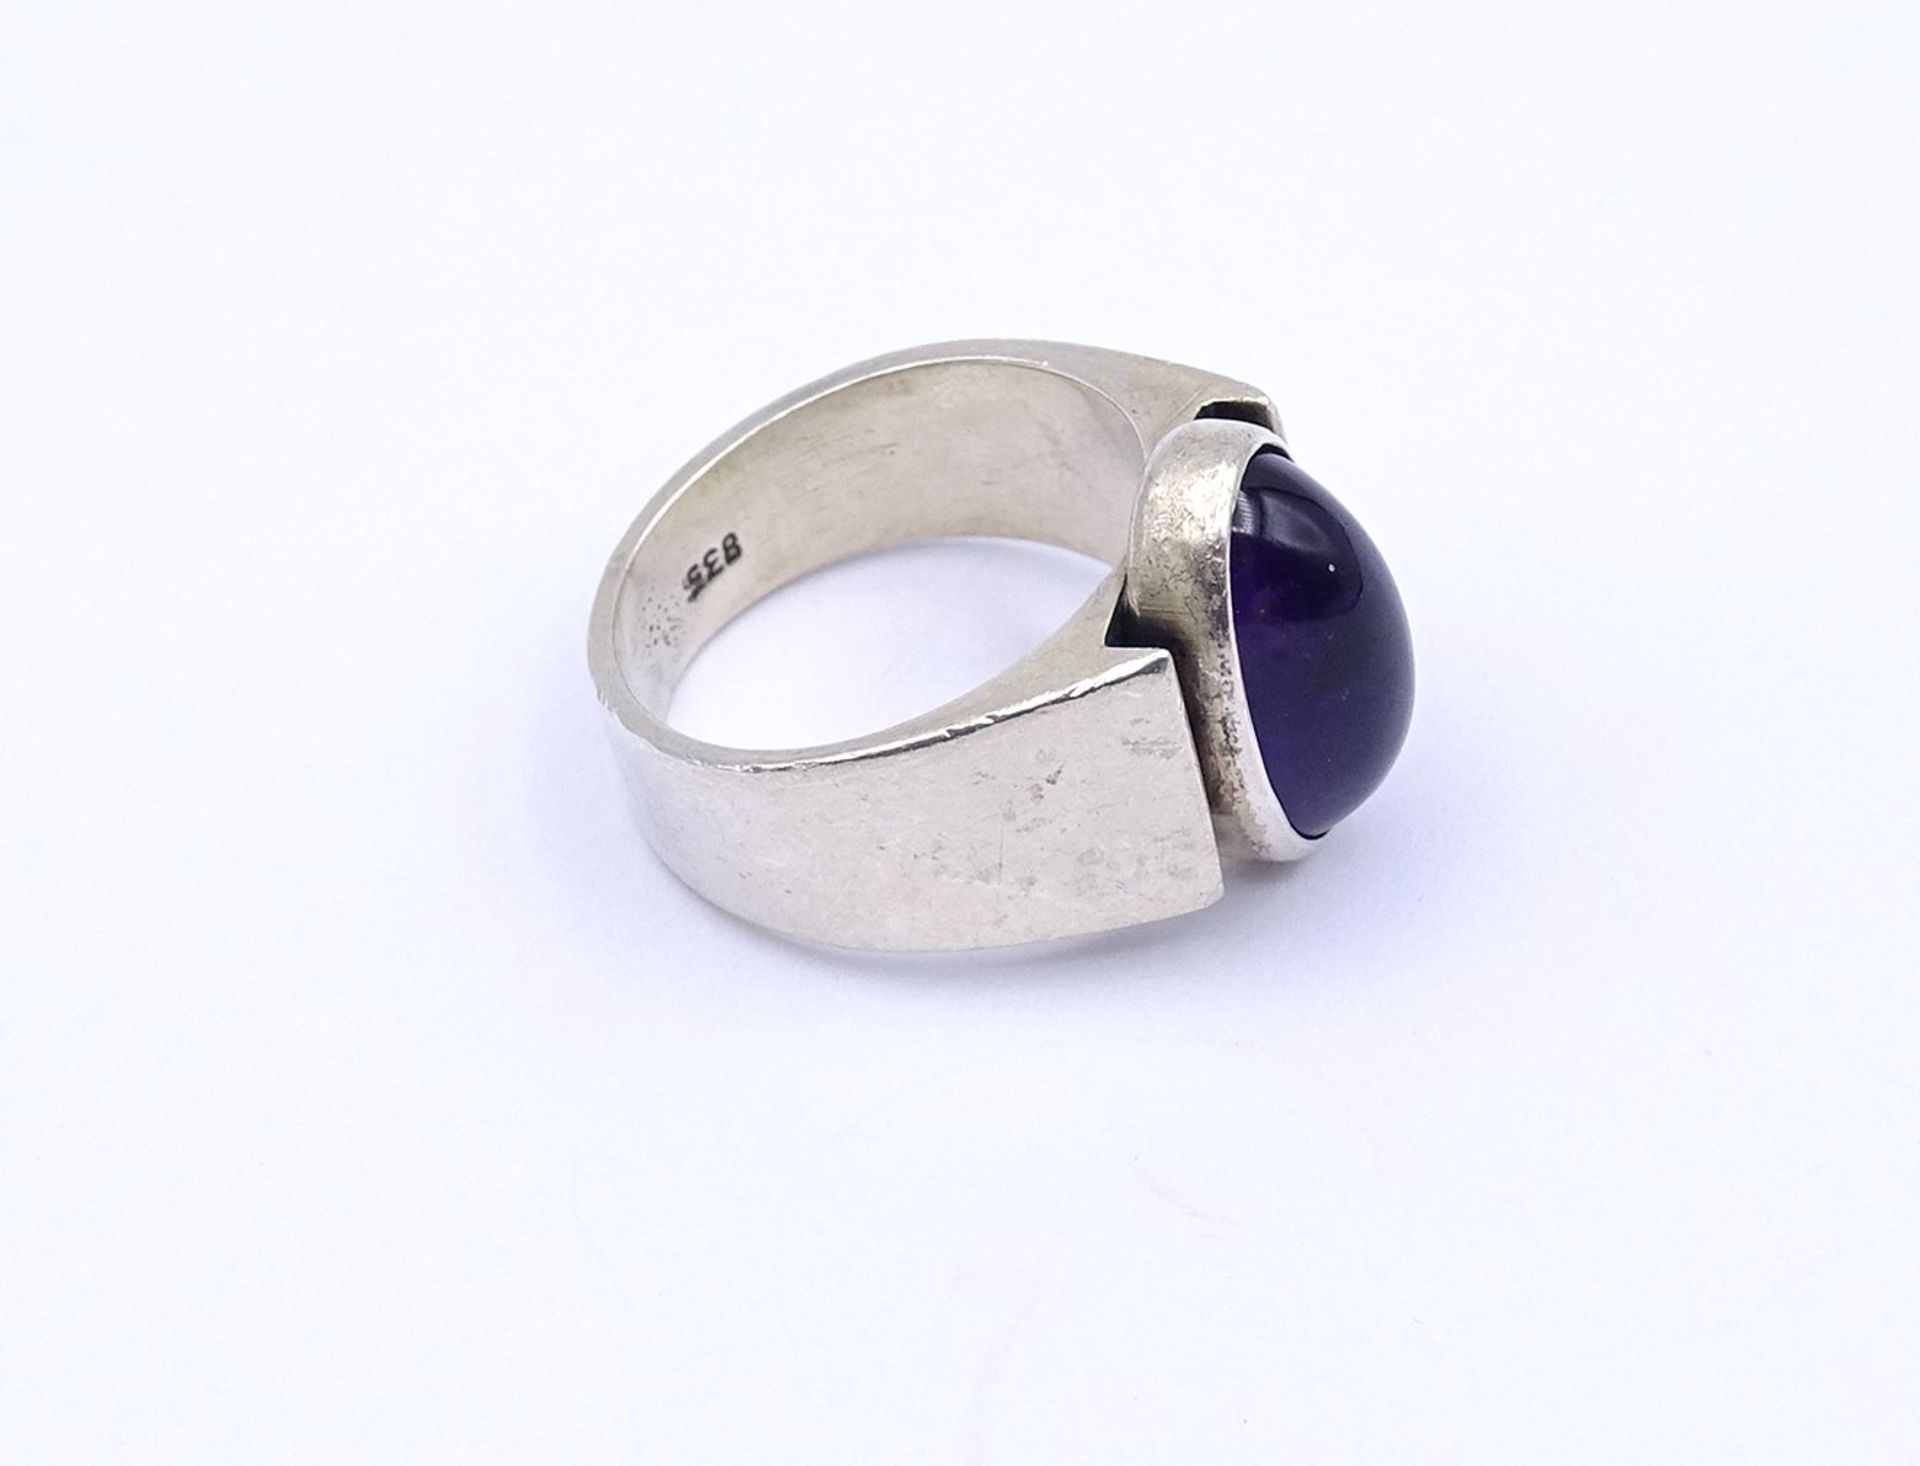 835er Silber Ring mit Amethyst Cabochon, 8,4g., RG 51/52 - Image 3 of 4